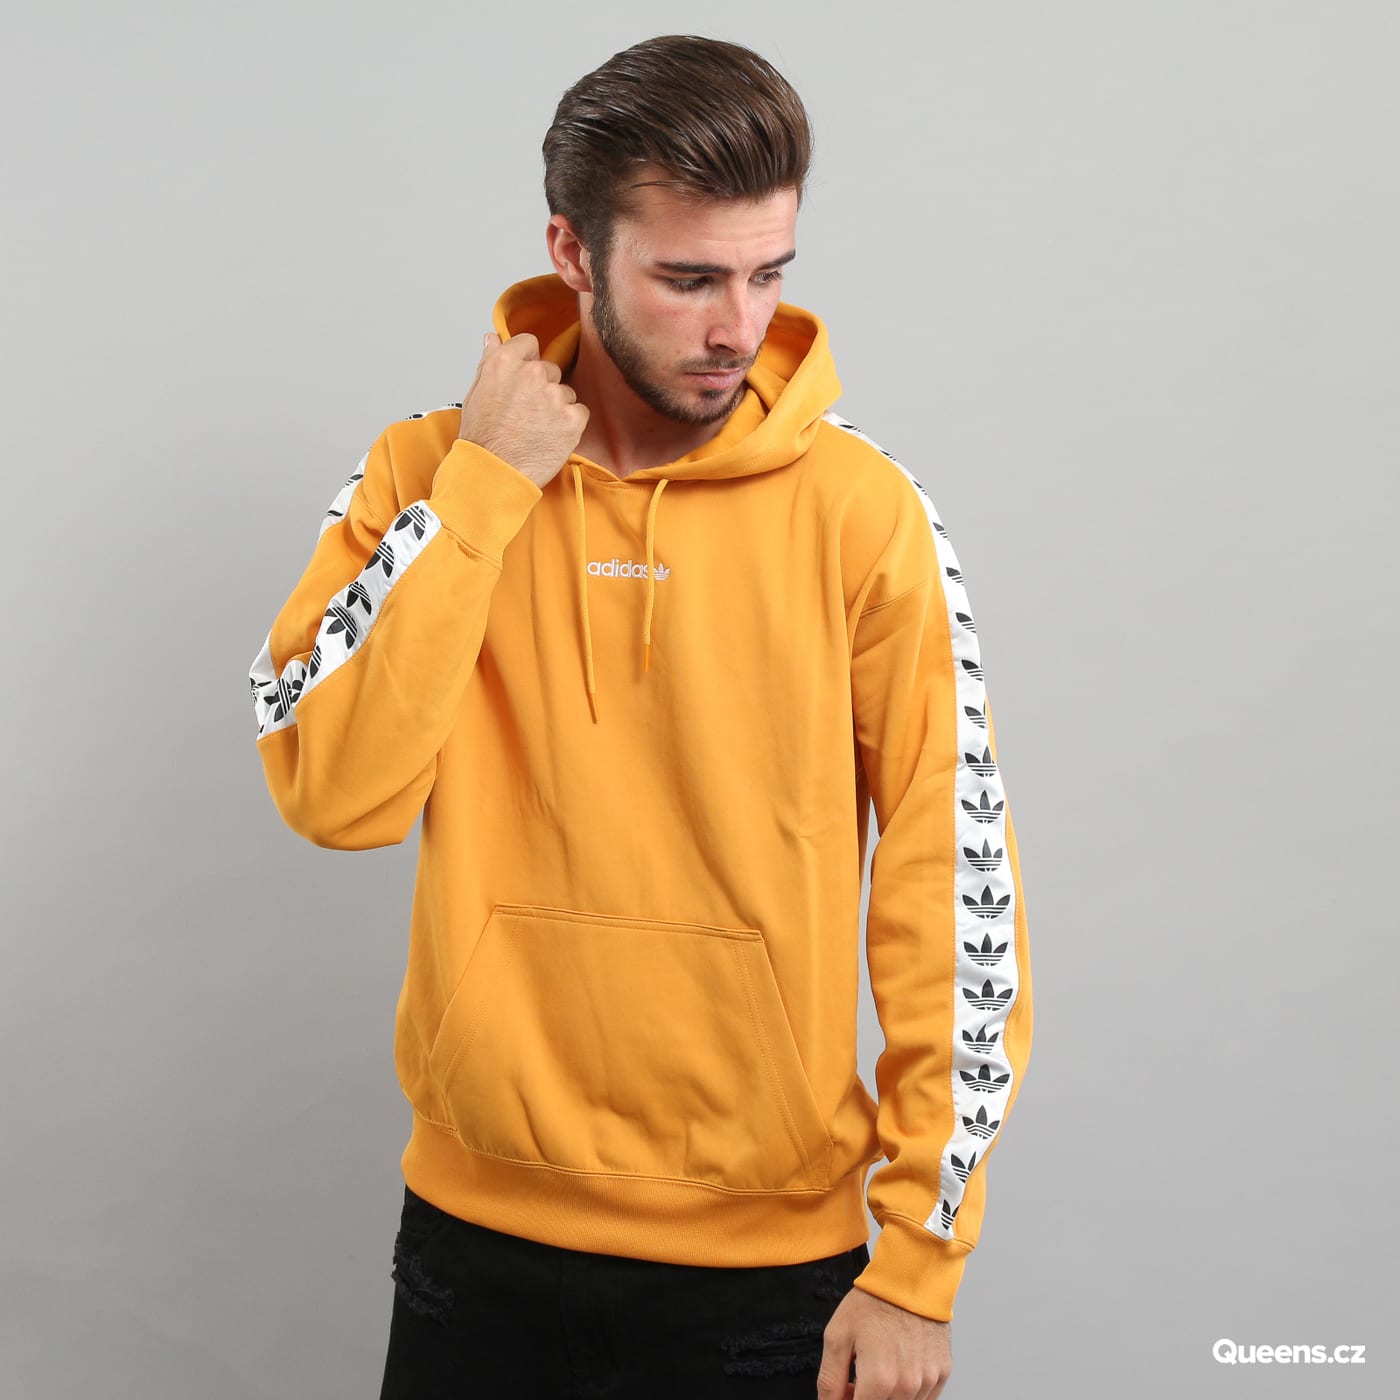 adidas originals adicolor tnt tape hoodie in yellow bs4669